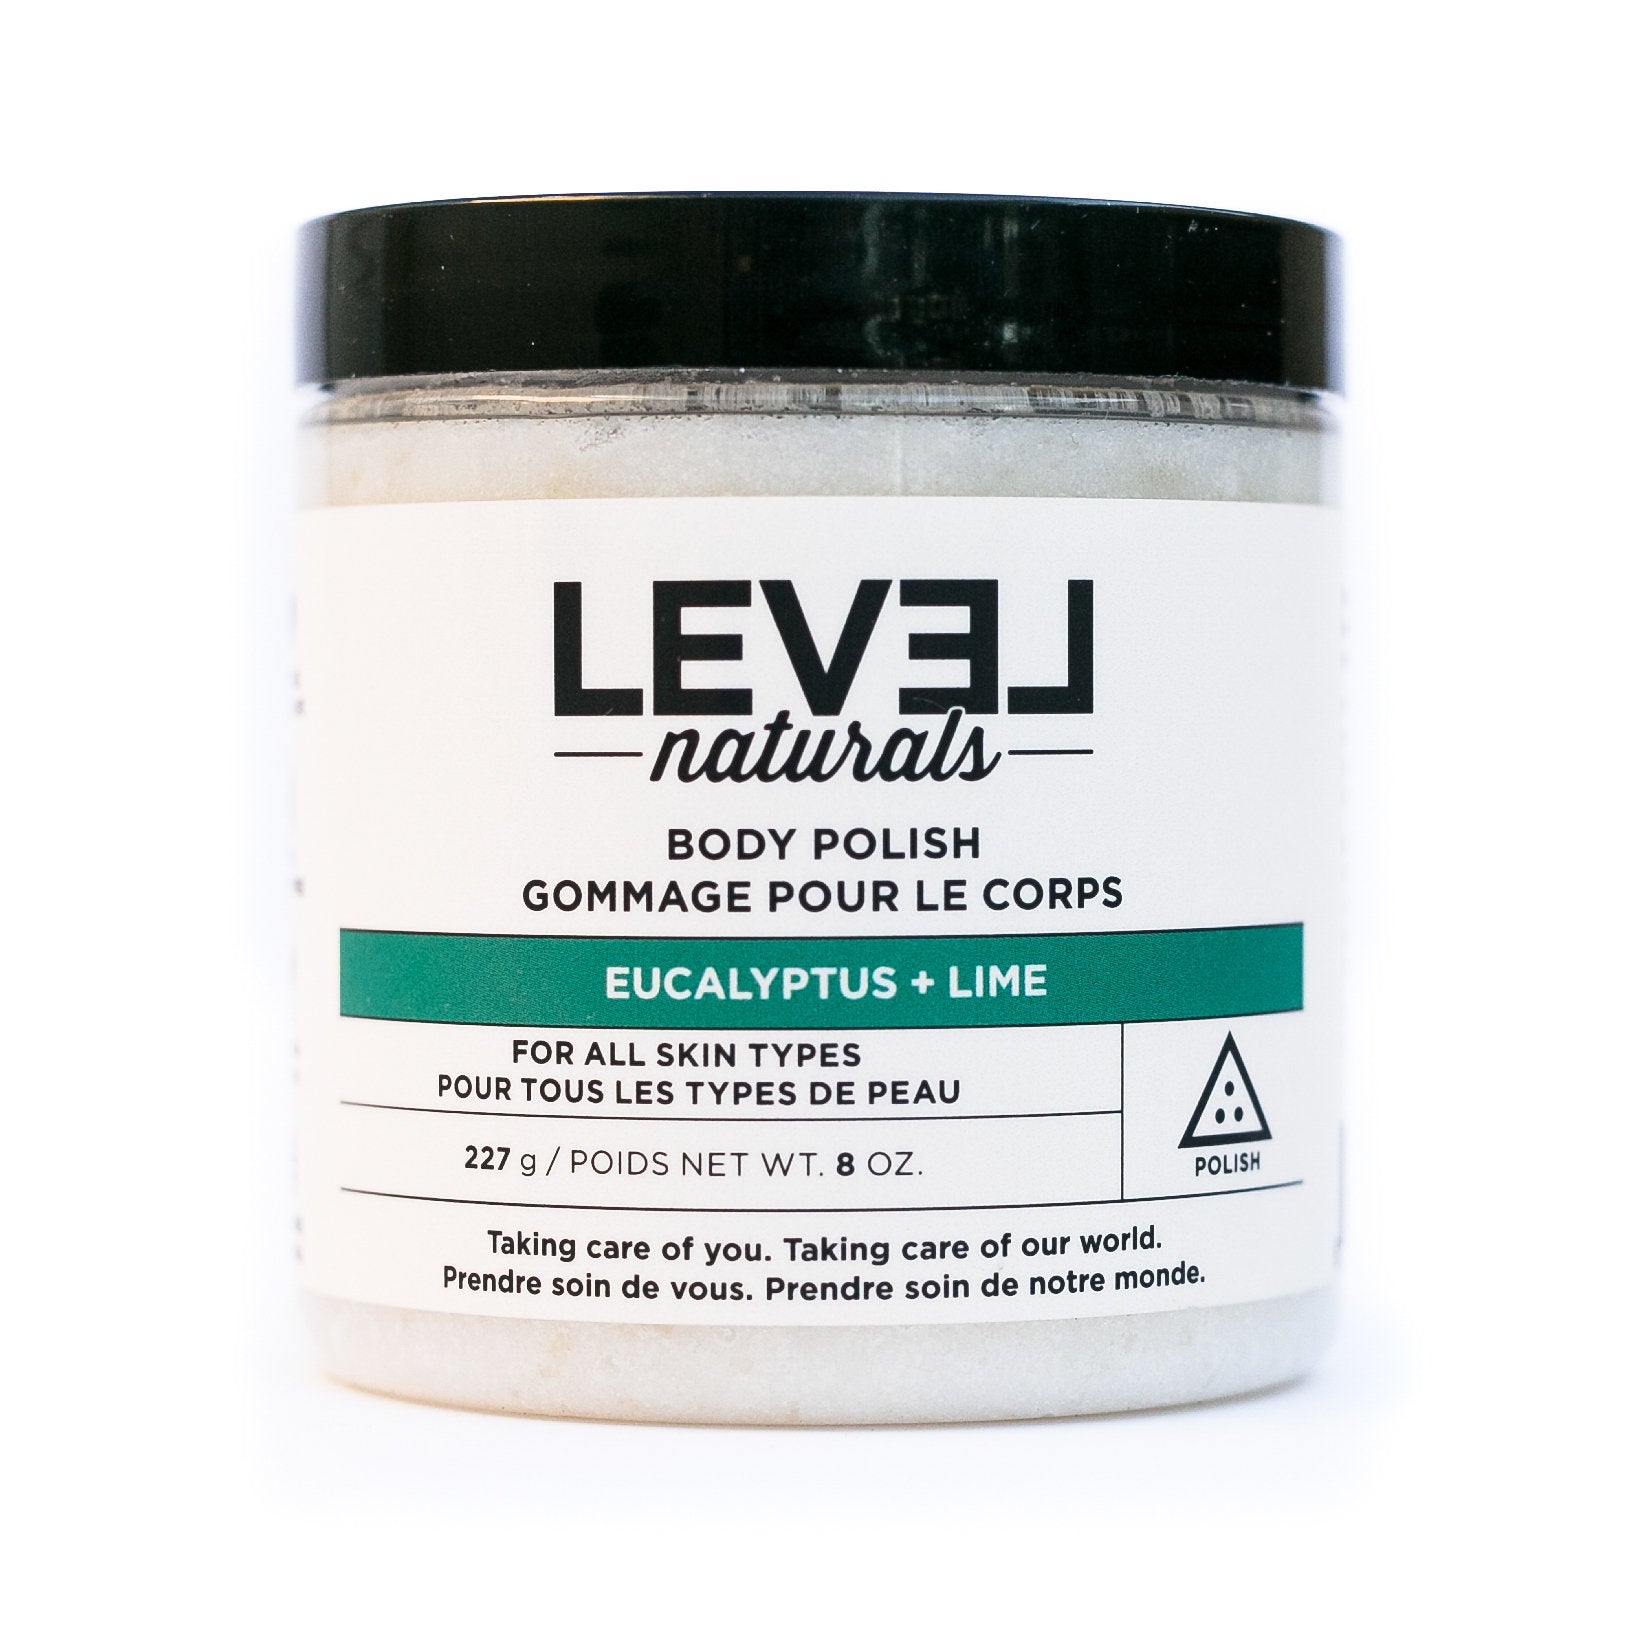 Eucalyptus + Lime Body Polish